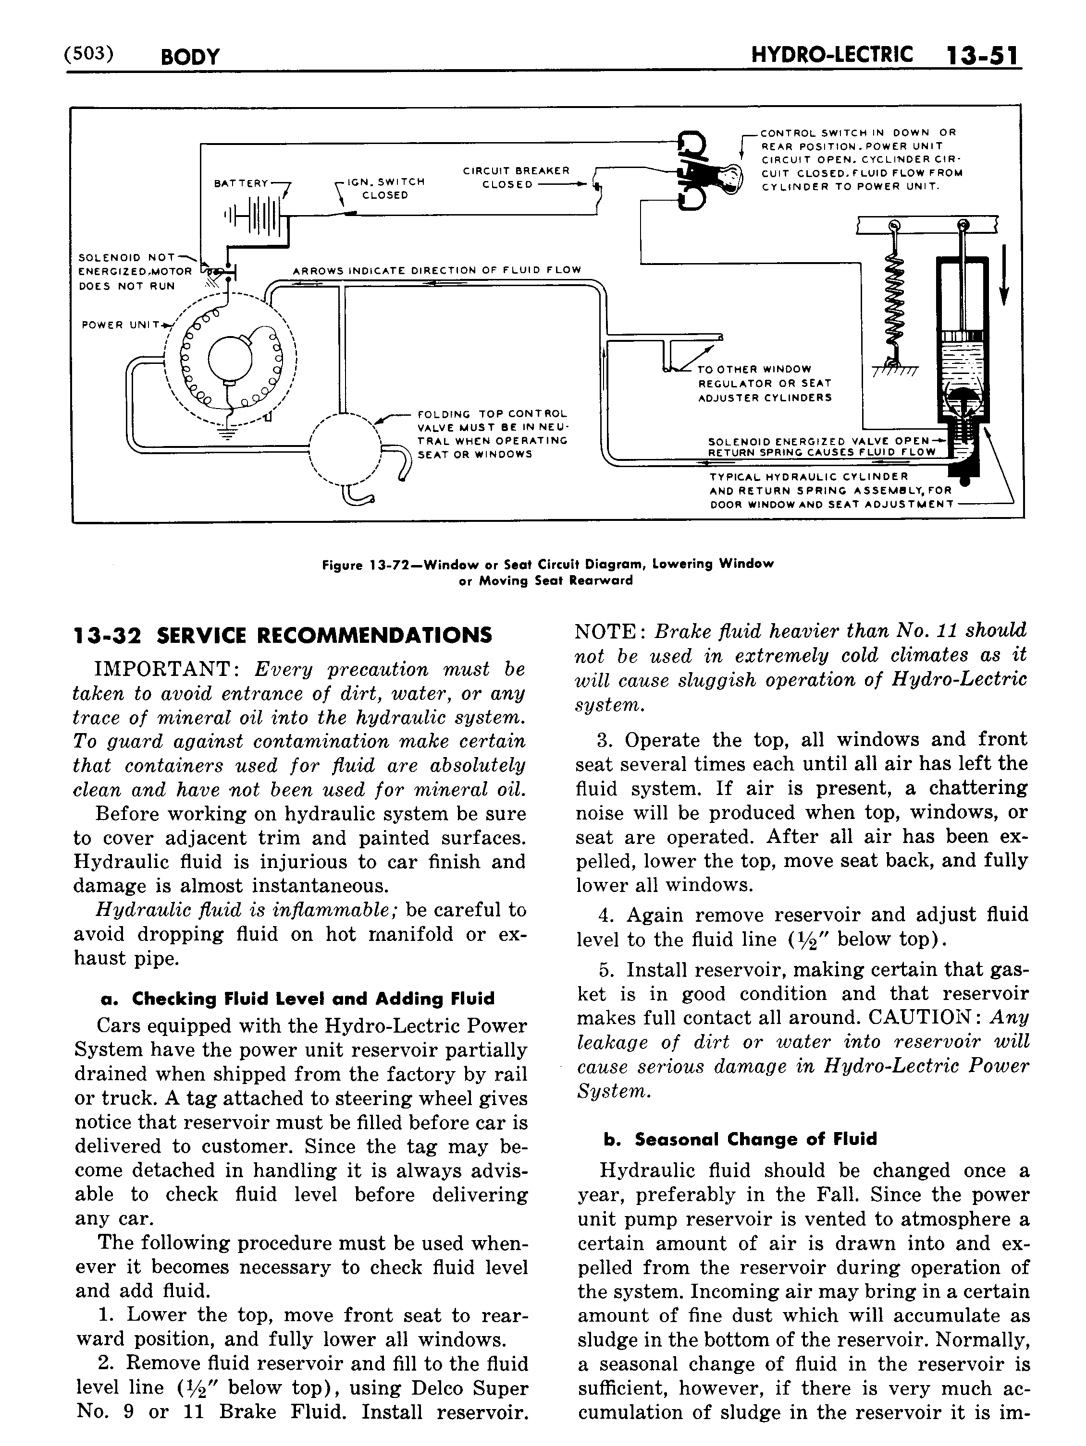 n_14 1948 Buick Shop Manual - Body-051-051.jpg